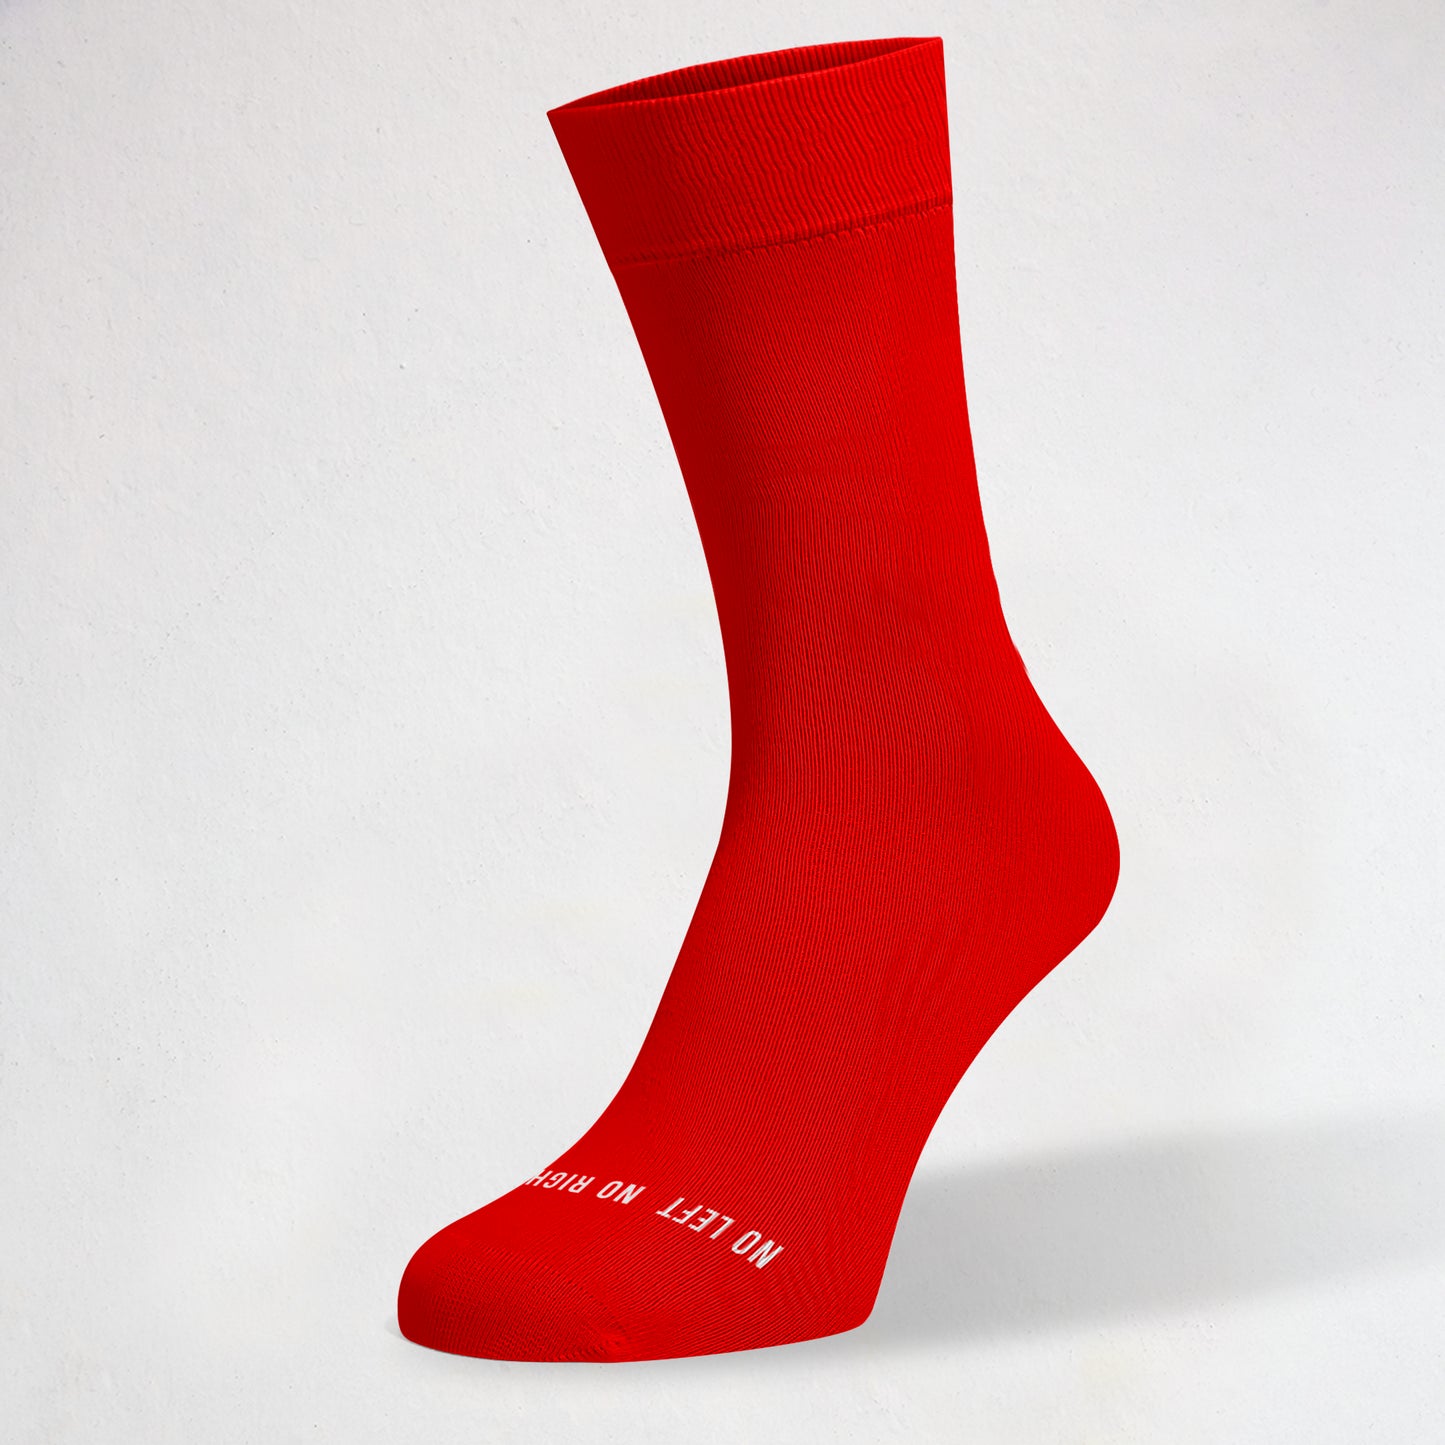 Red Single Sock